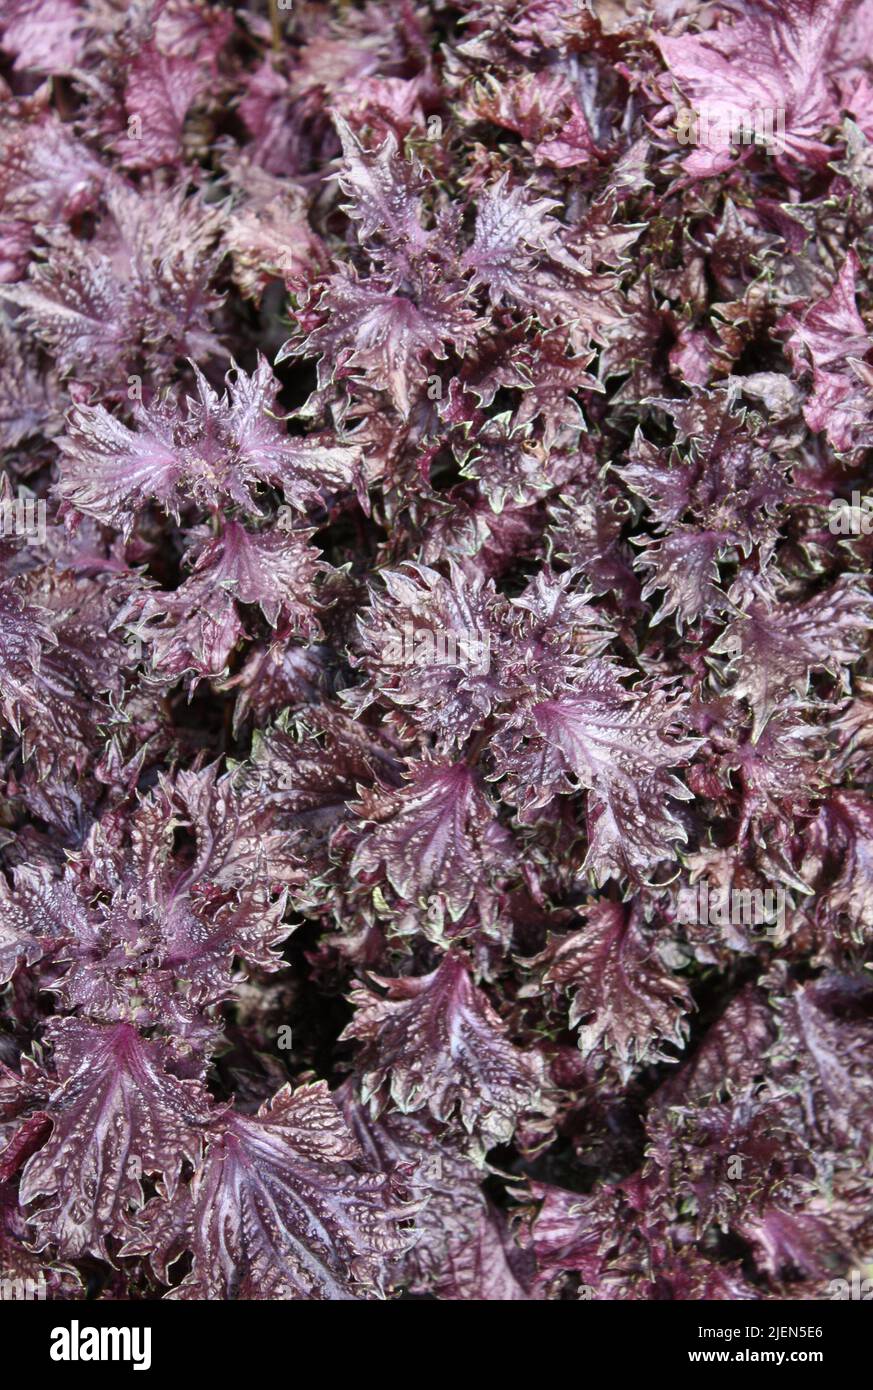 A Background Image of Purple Perilla Frutescens Leaves. Stock Photo